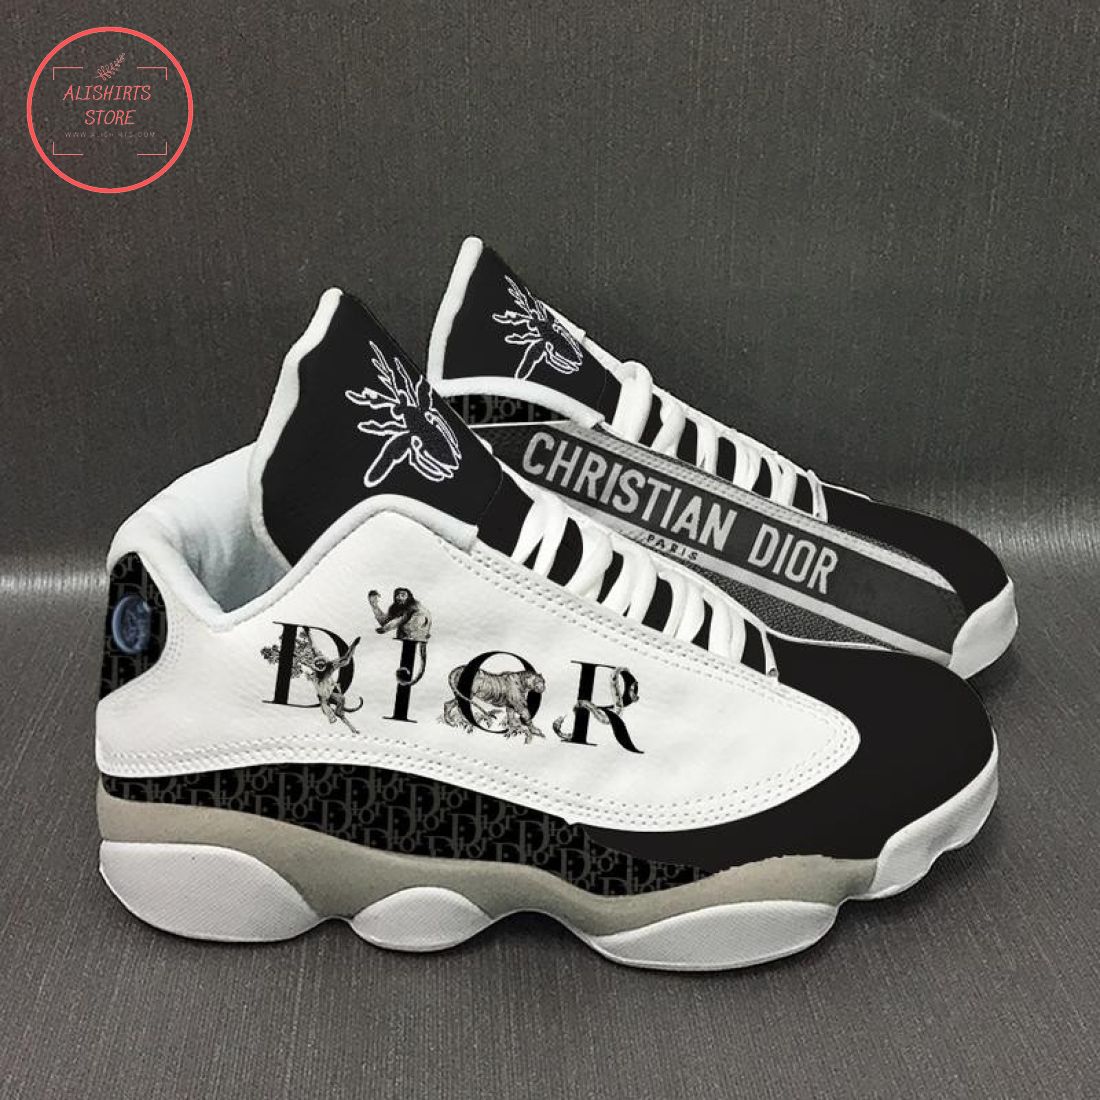 Christian Dior Black and White Air Jordan 13 Sneaker